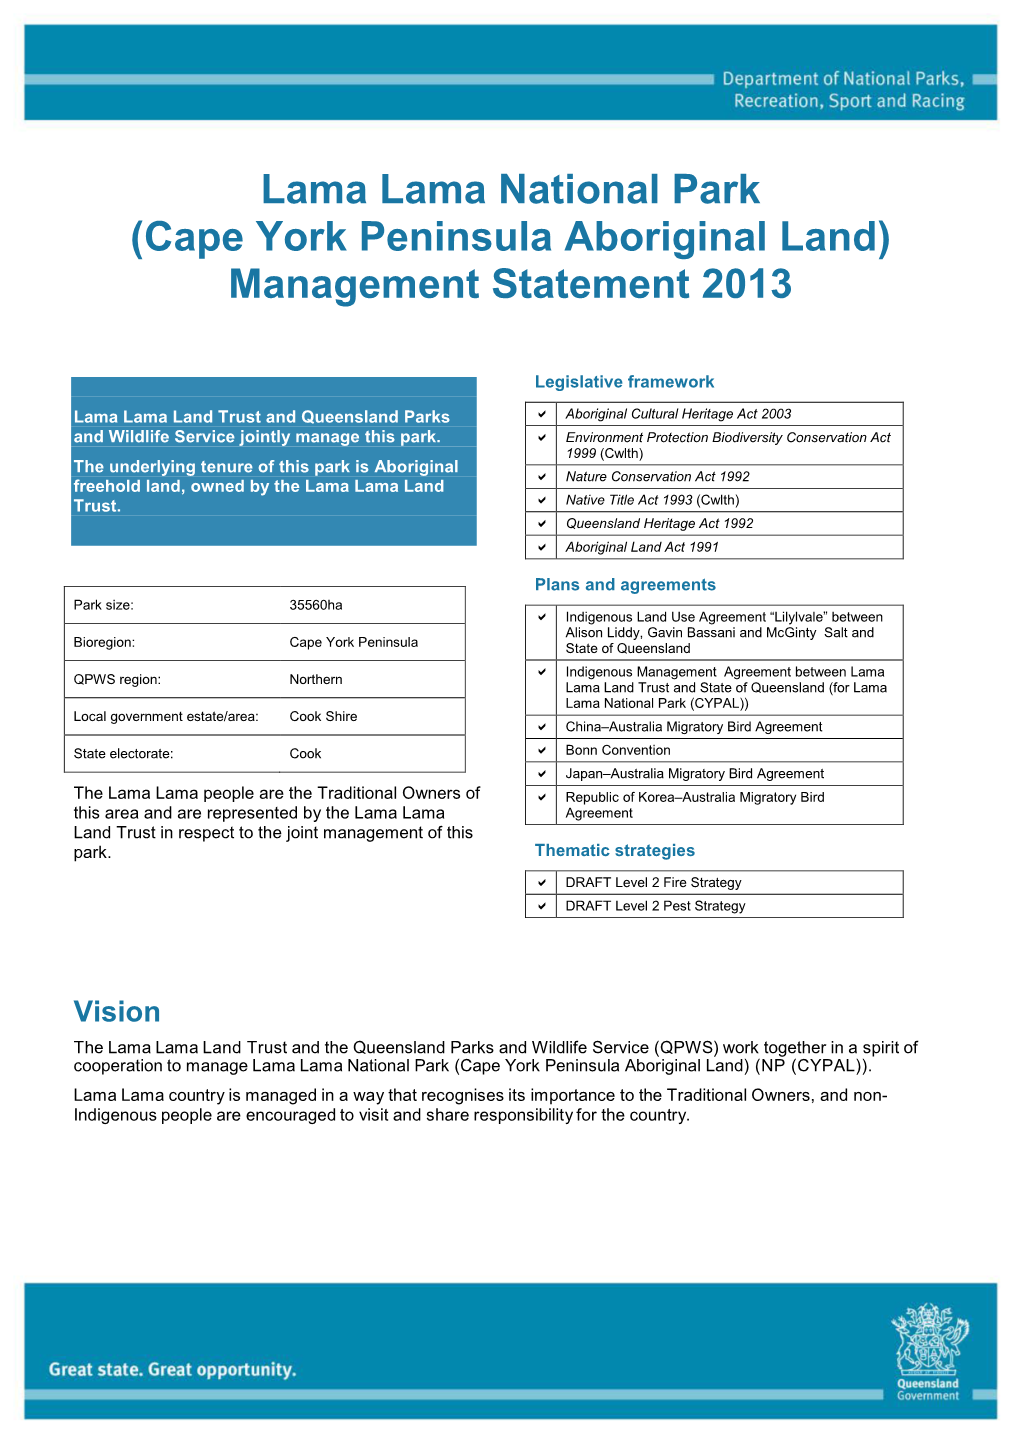 (Cape York Peninsula Aboriginal Land) Management Statement 2013